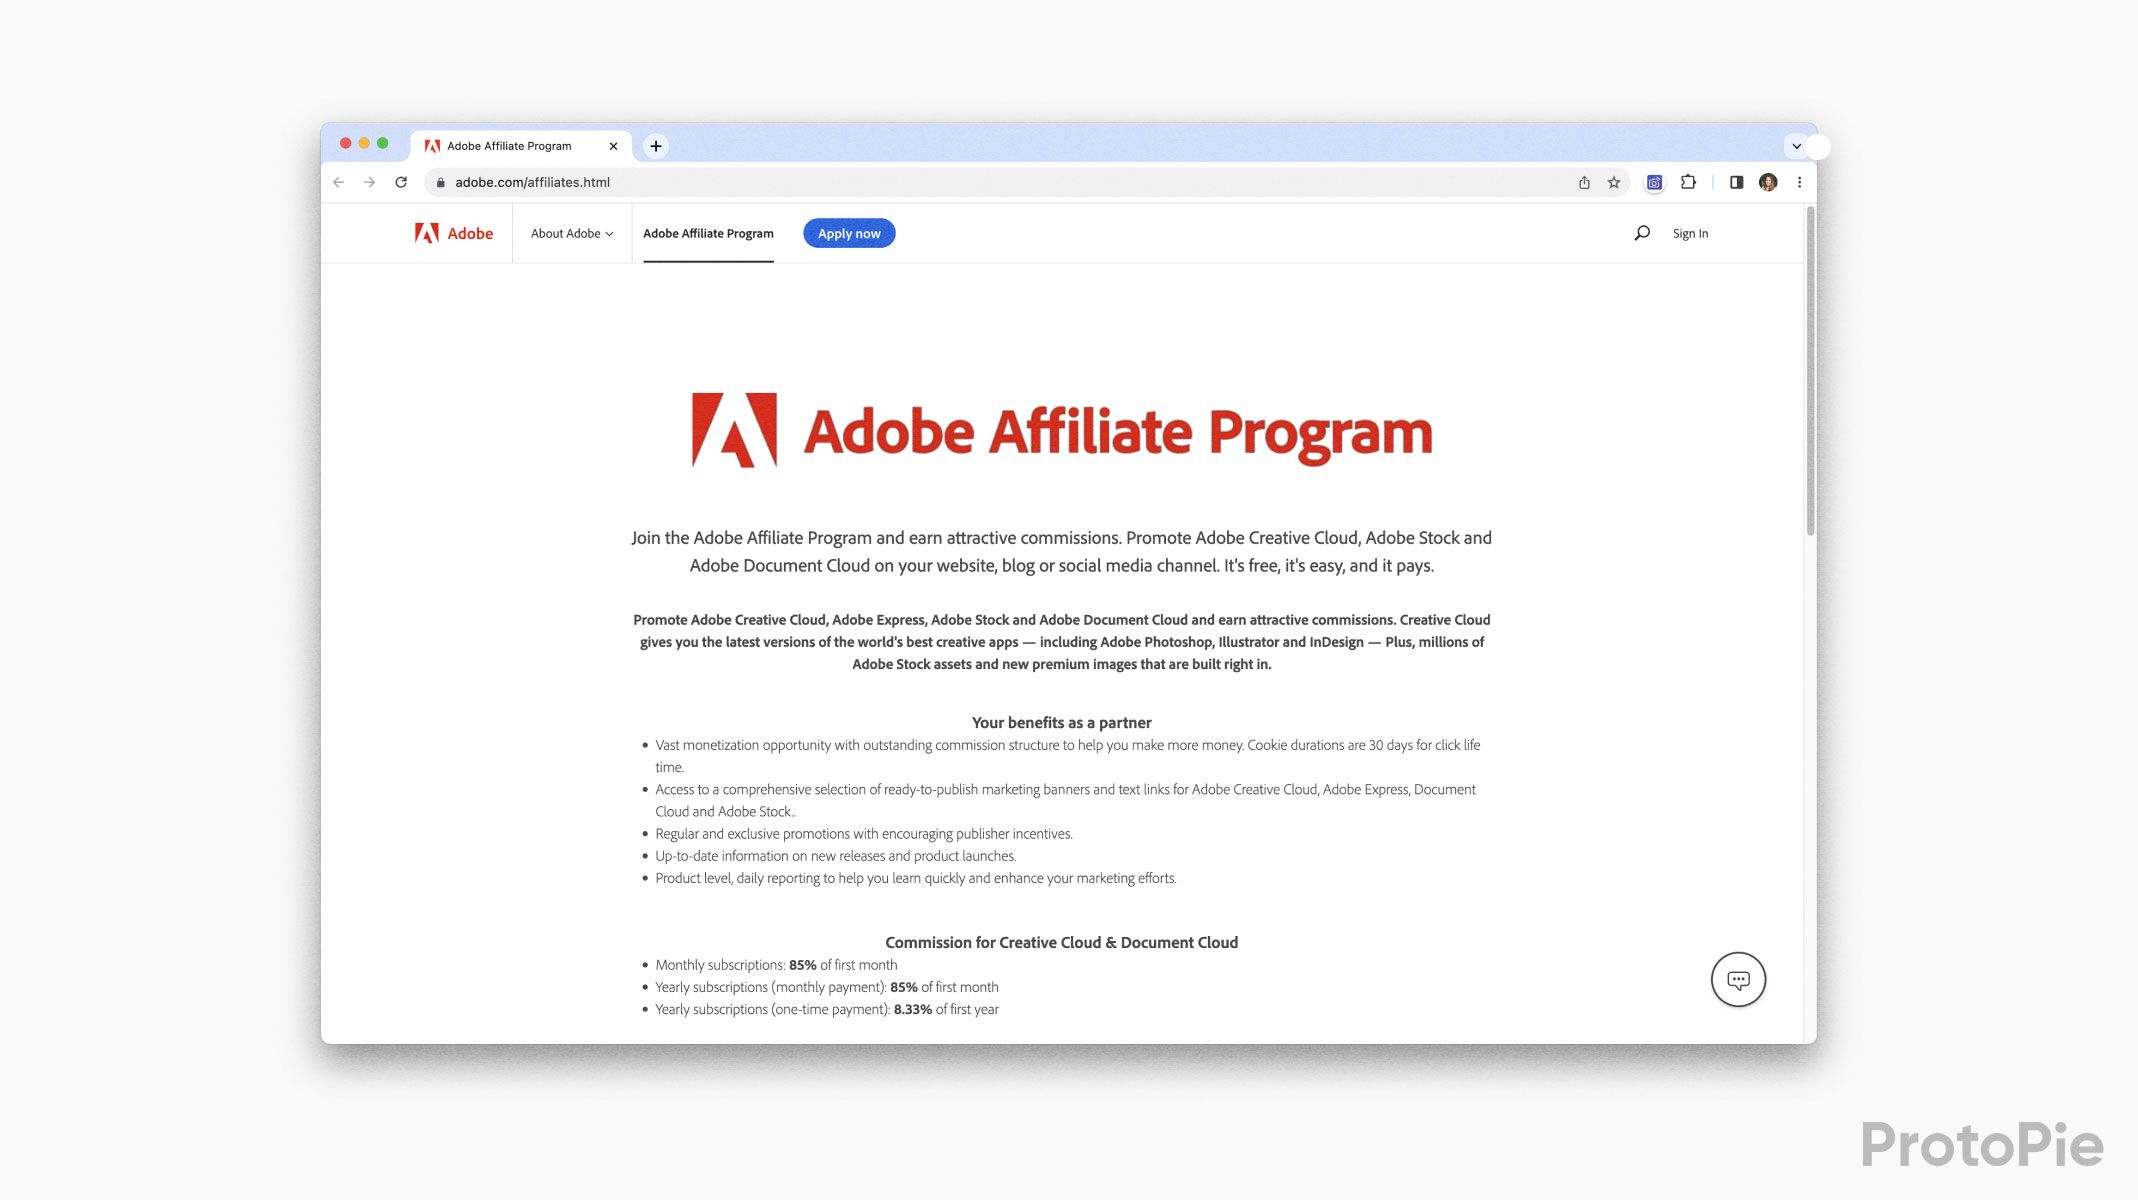 Adobe affiliate program website